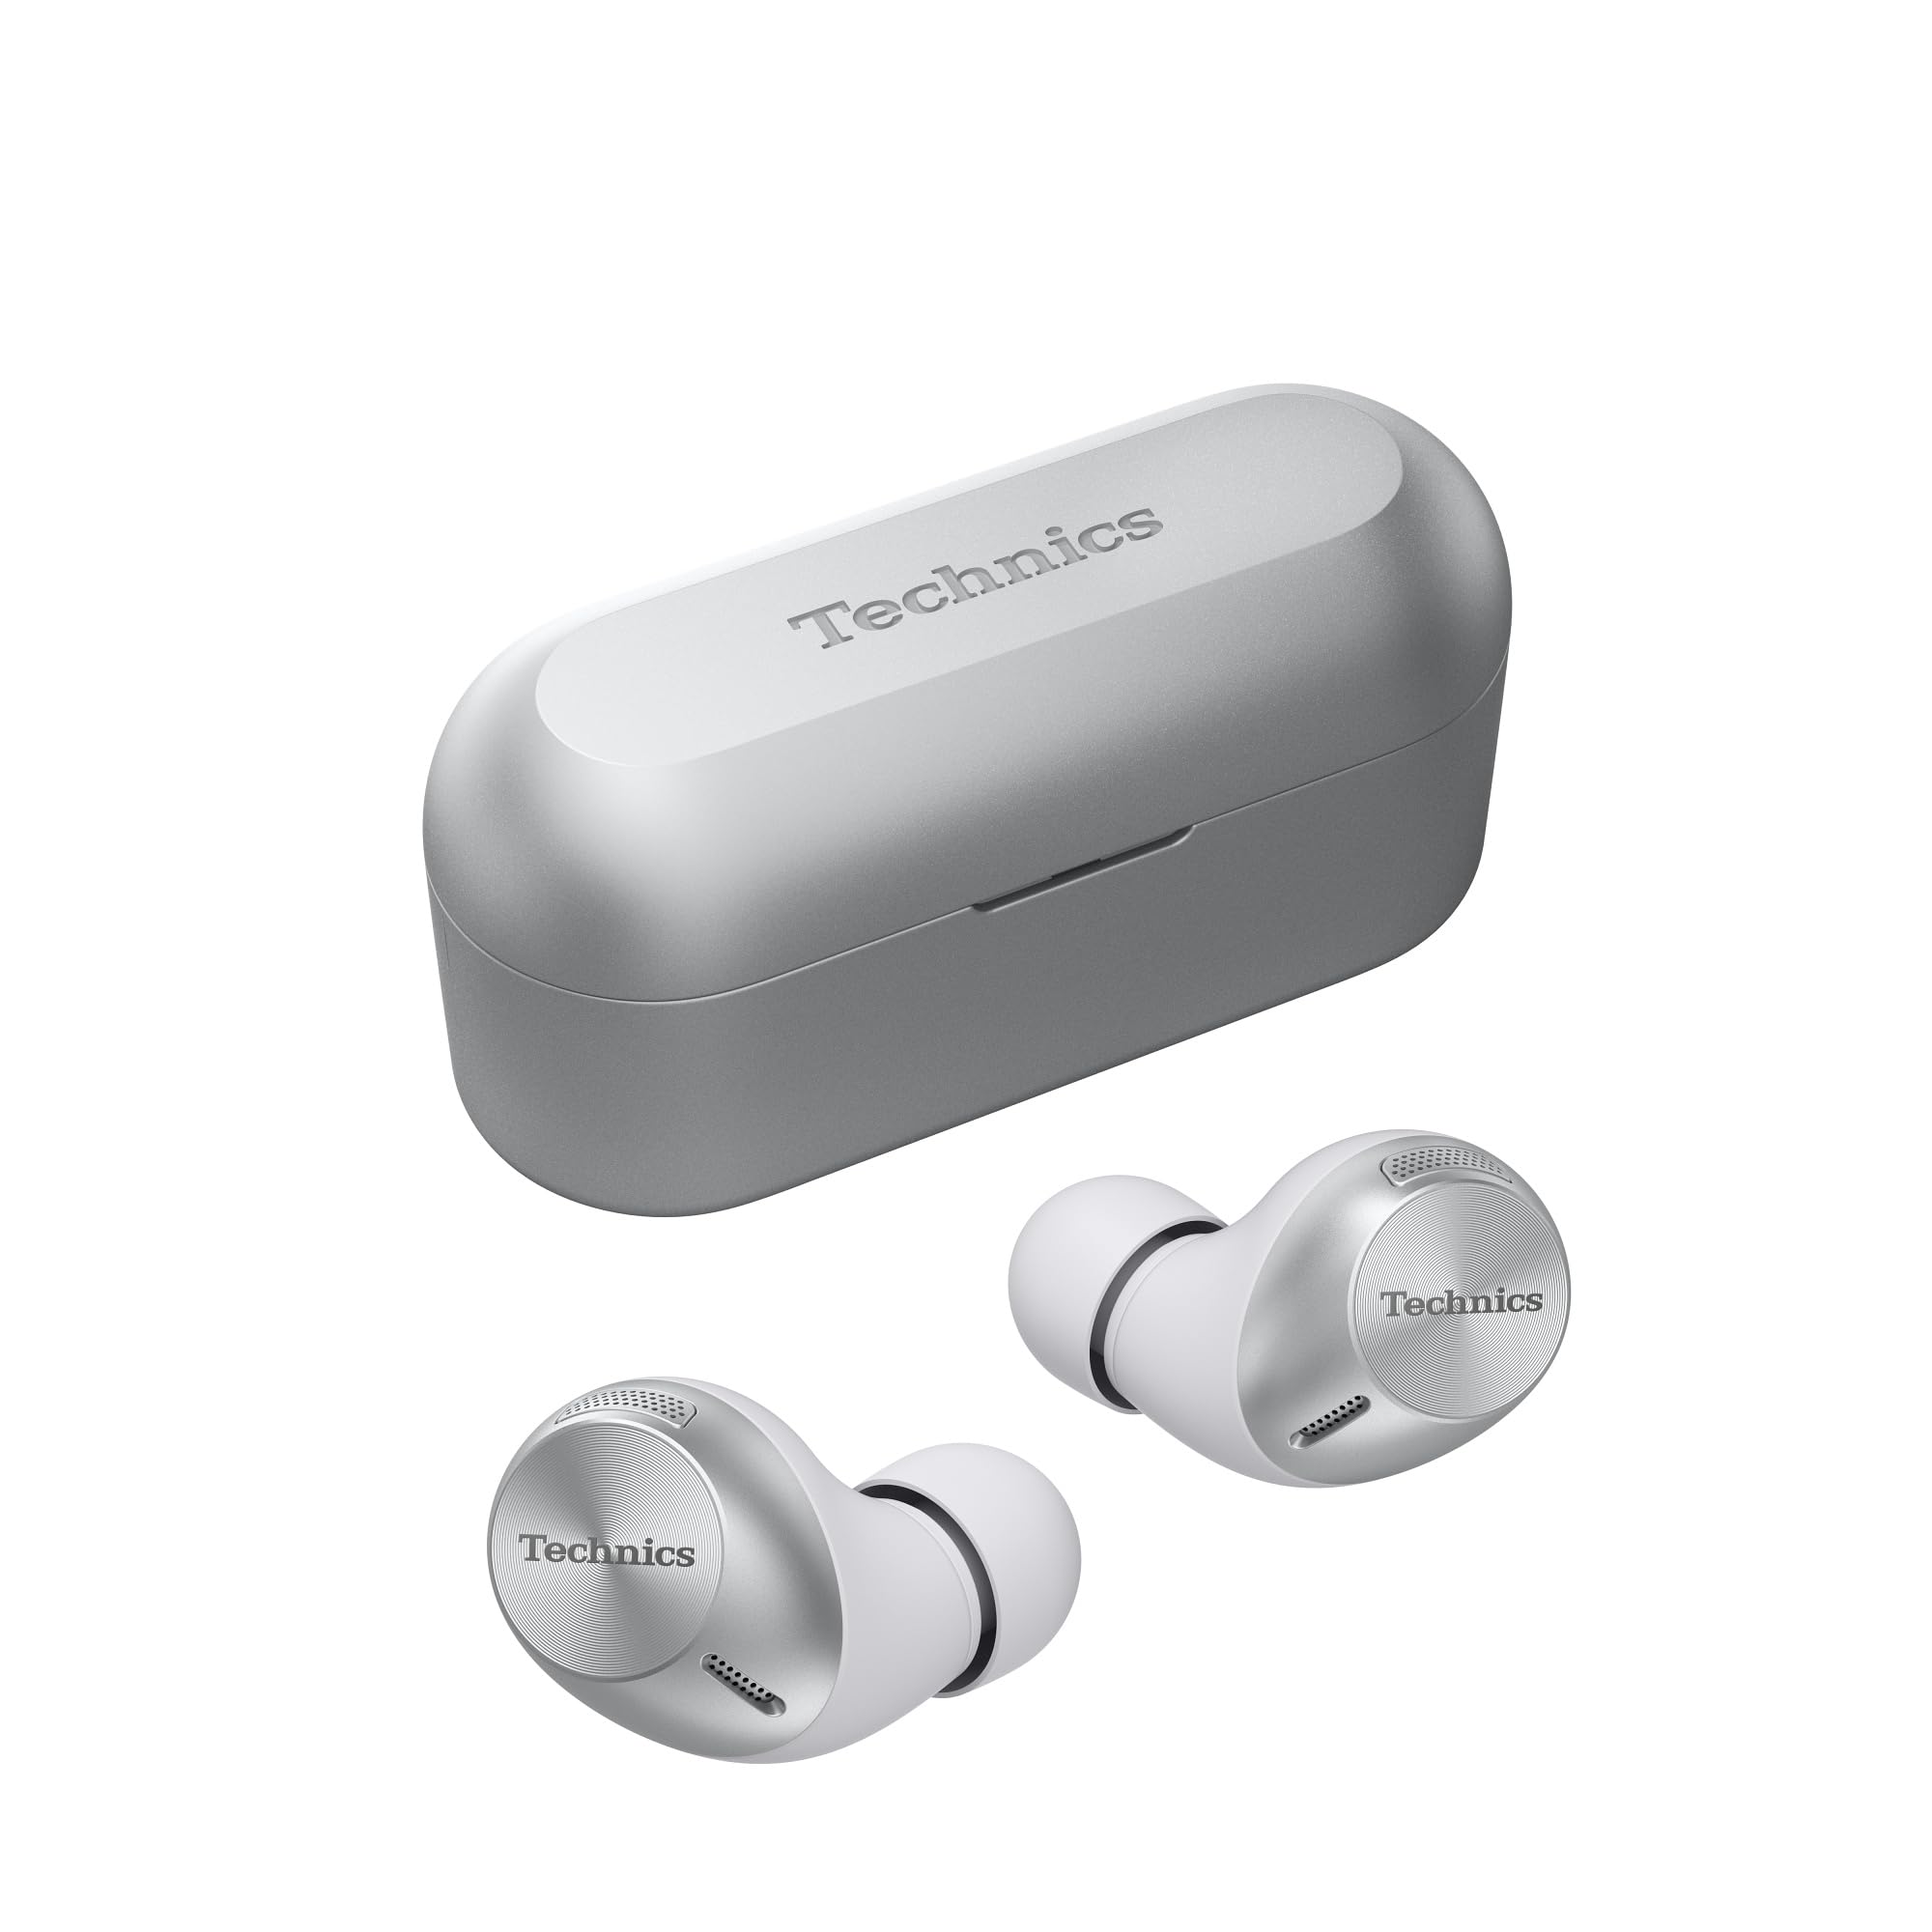 Technics EAH-AZ40M2ES kabellose Ohrhörer mit Noise Cancelling, Multipoint Bluetooth 3 Geräte, bequemer In-Ear-Kopfhörer mit integriertem Mikrofon, anpassbare Passform, Silber